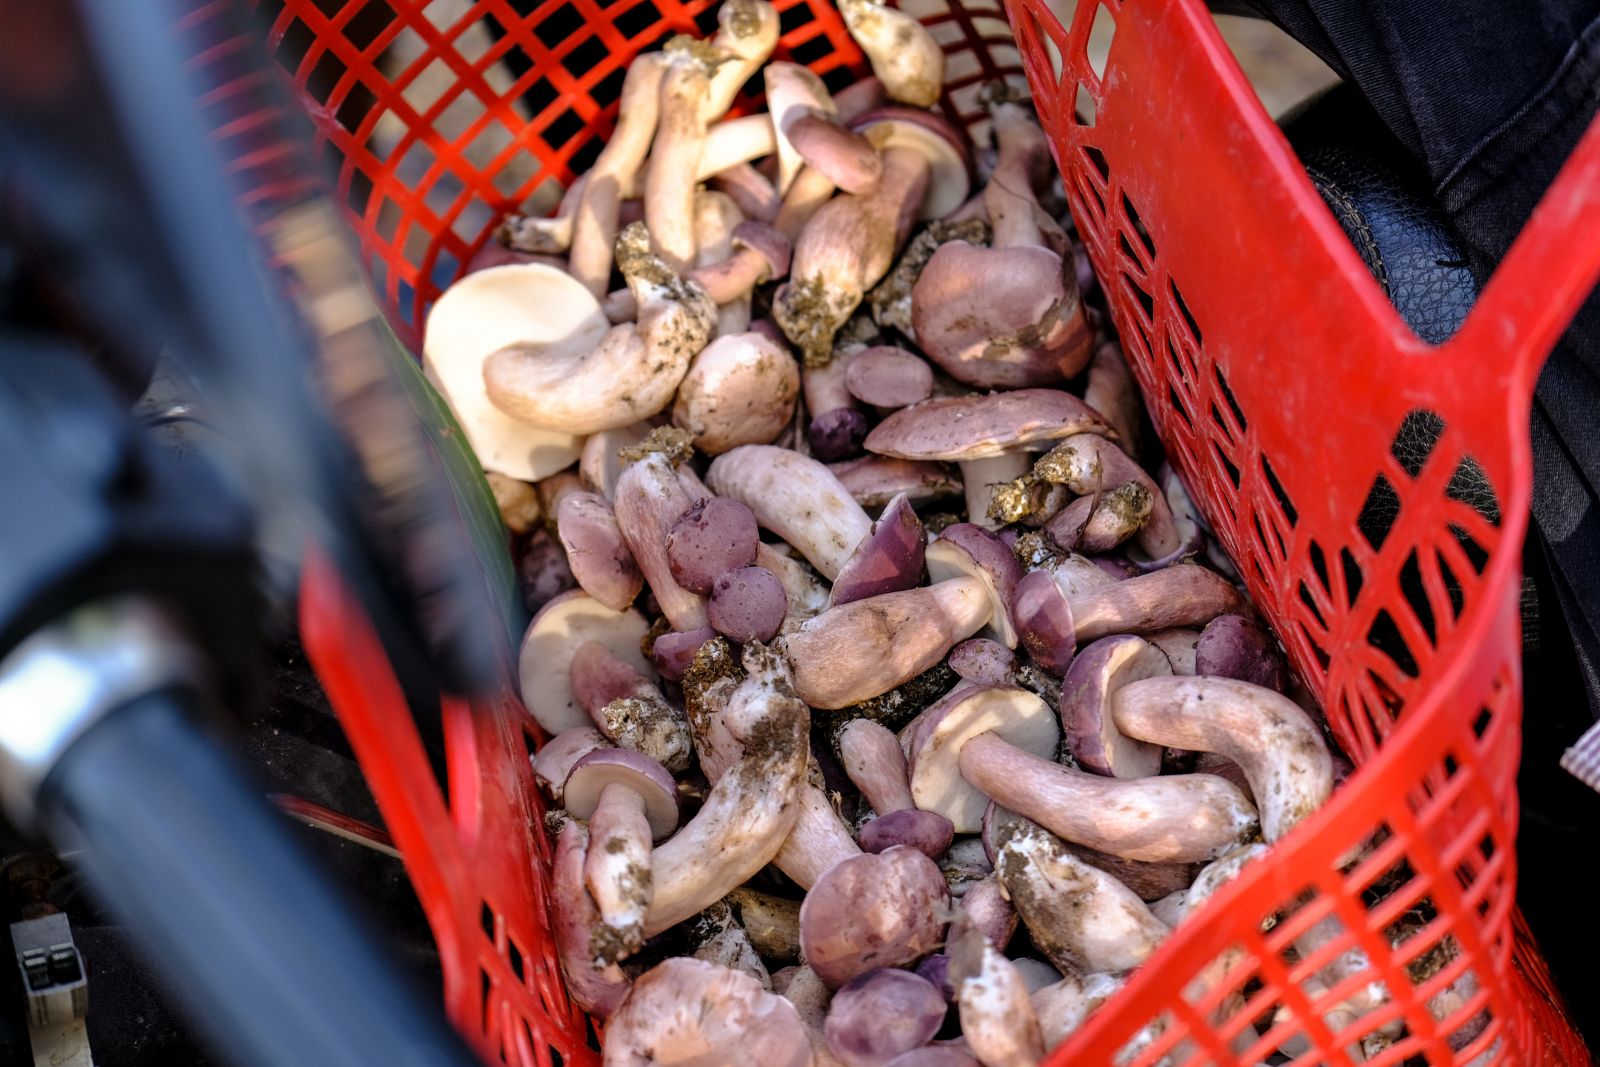 A basket full of mushrooms